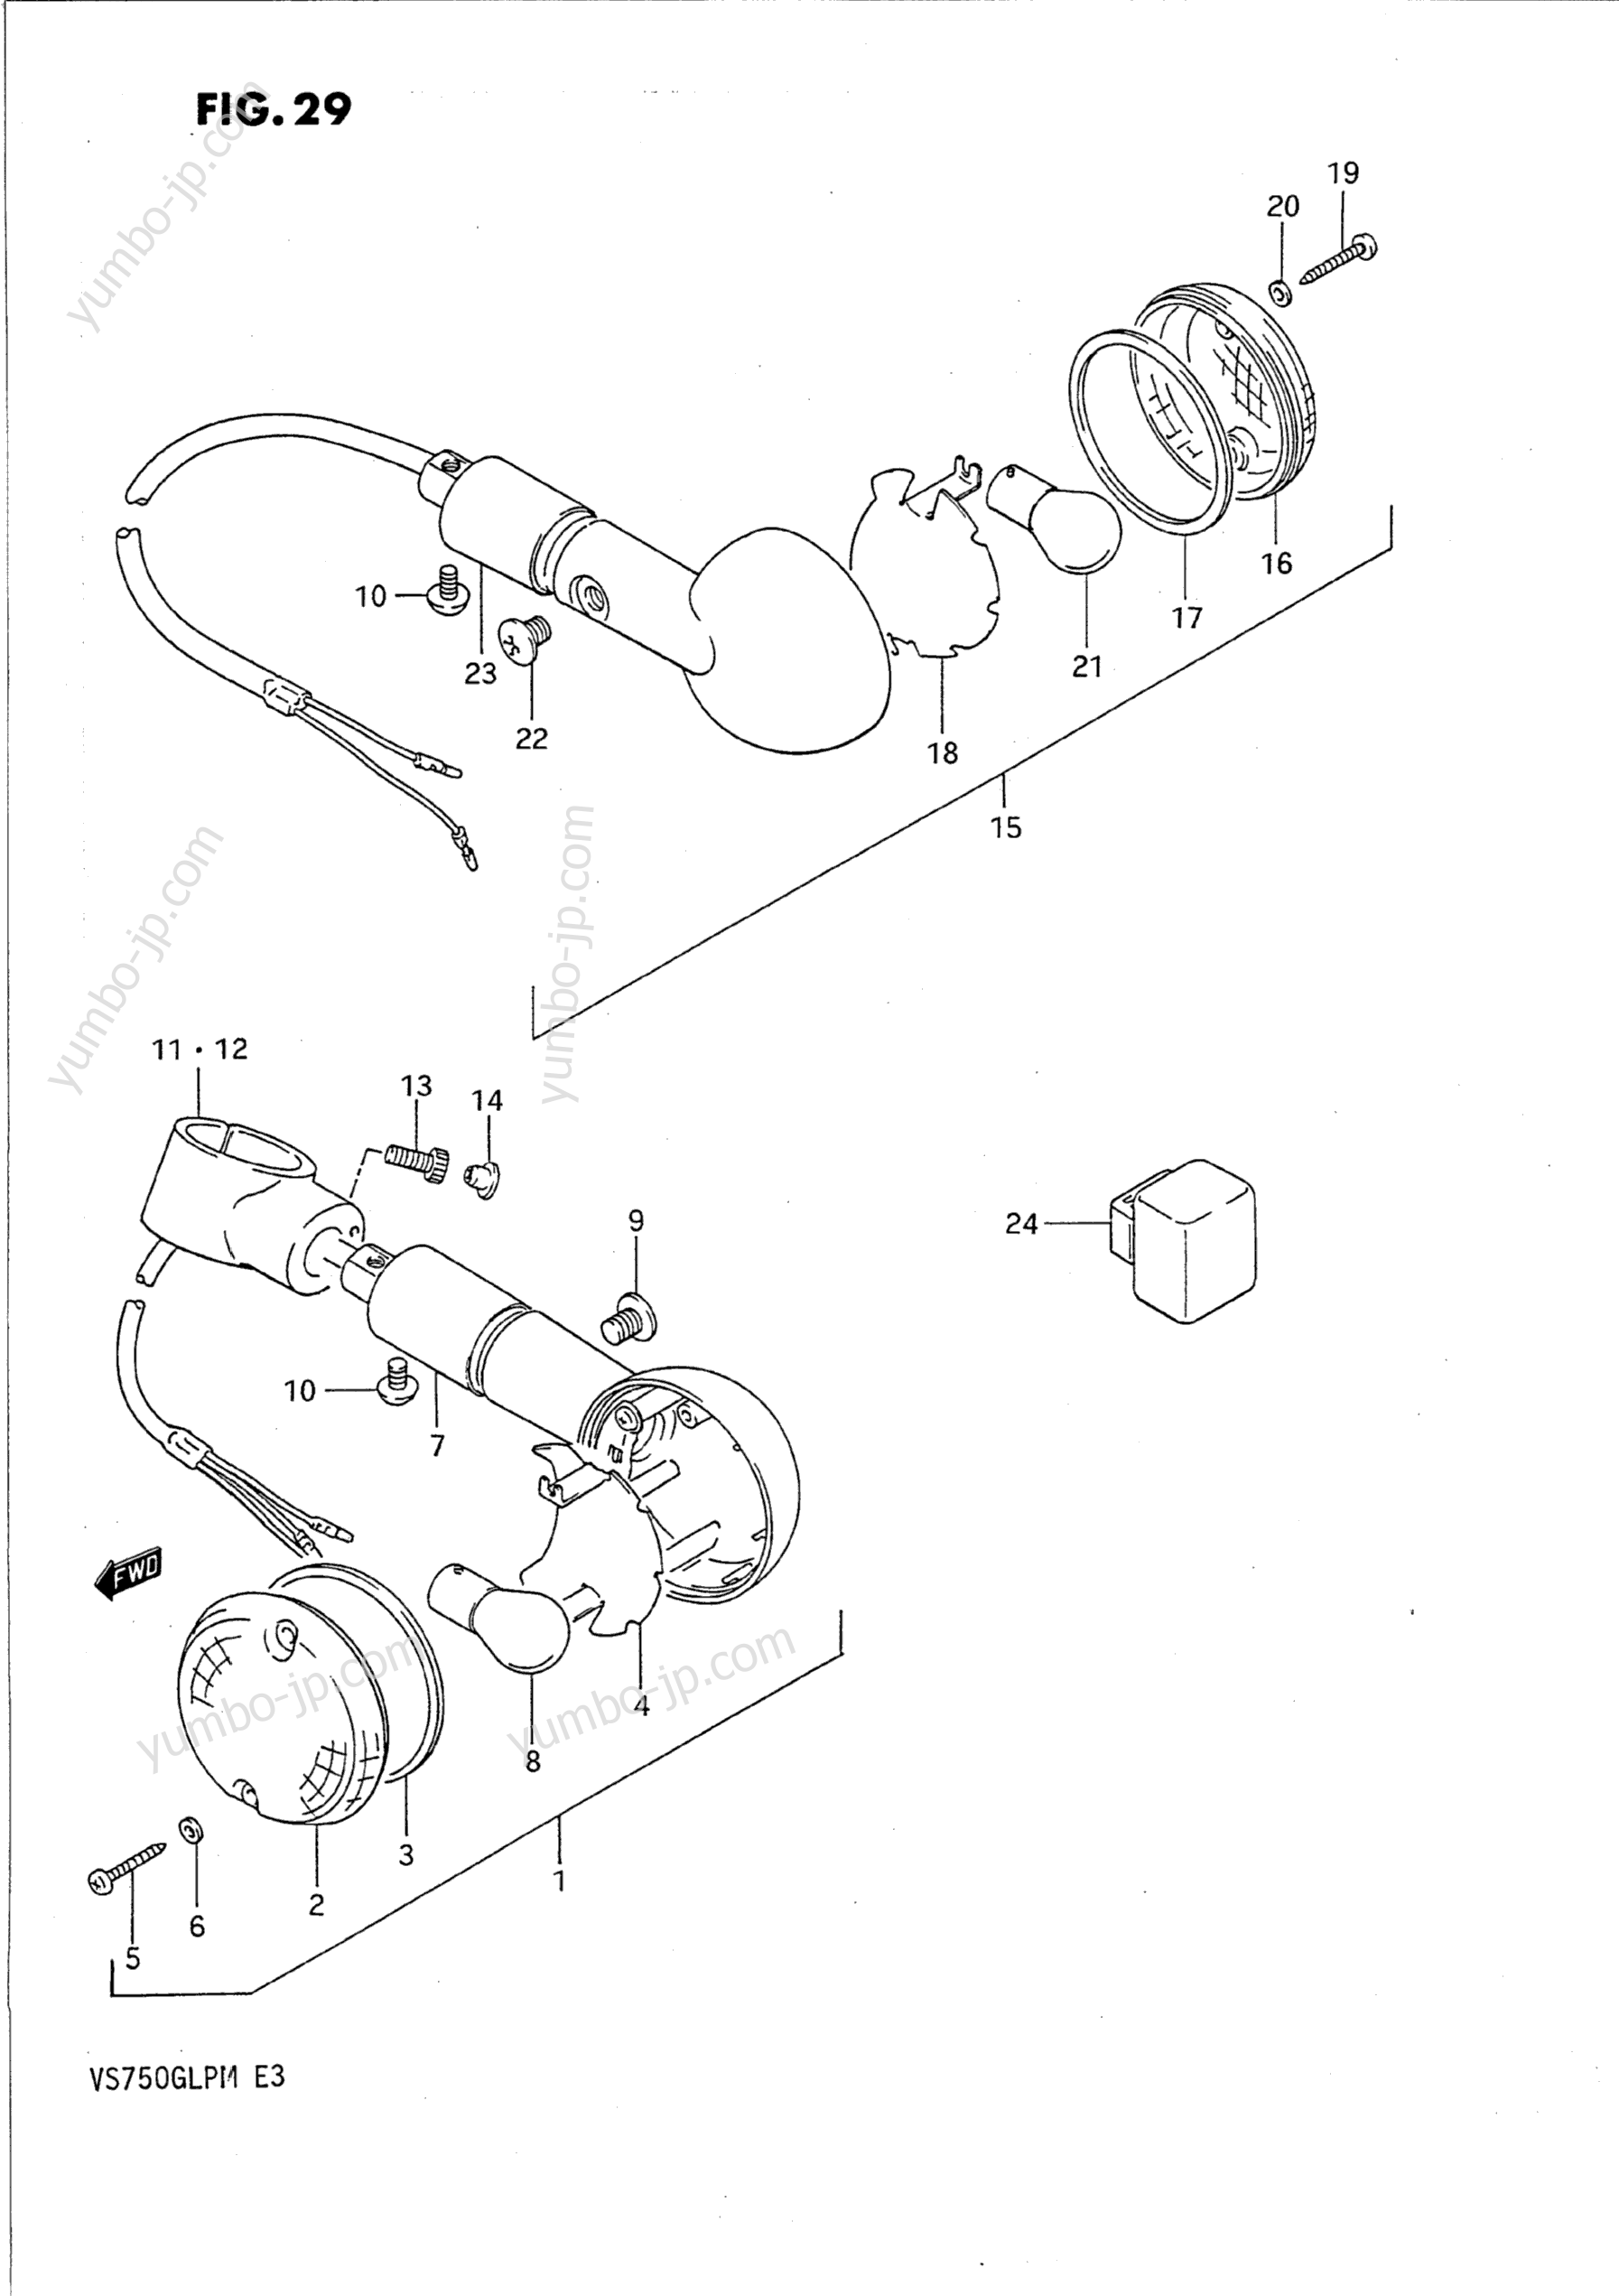 TURN SIGNAL LAMP for motorcycles SUZUKI Intruder (VS750GLP) 1988 year